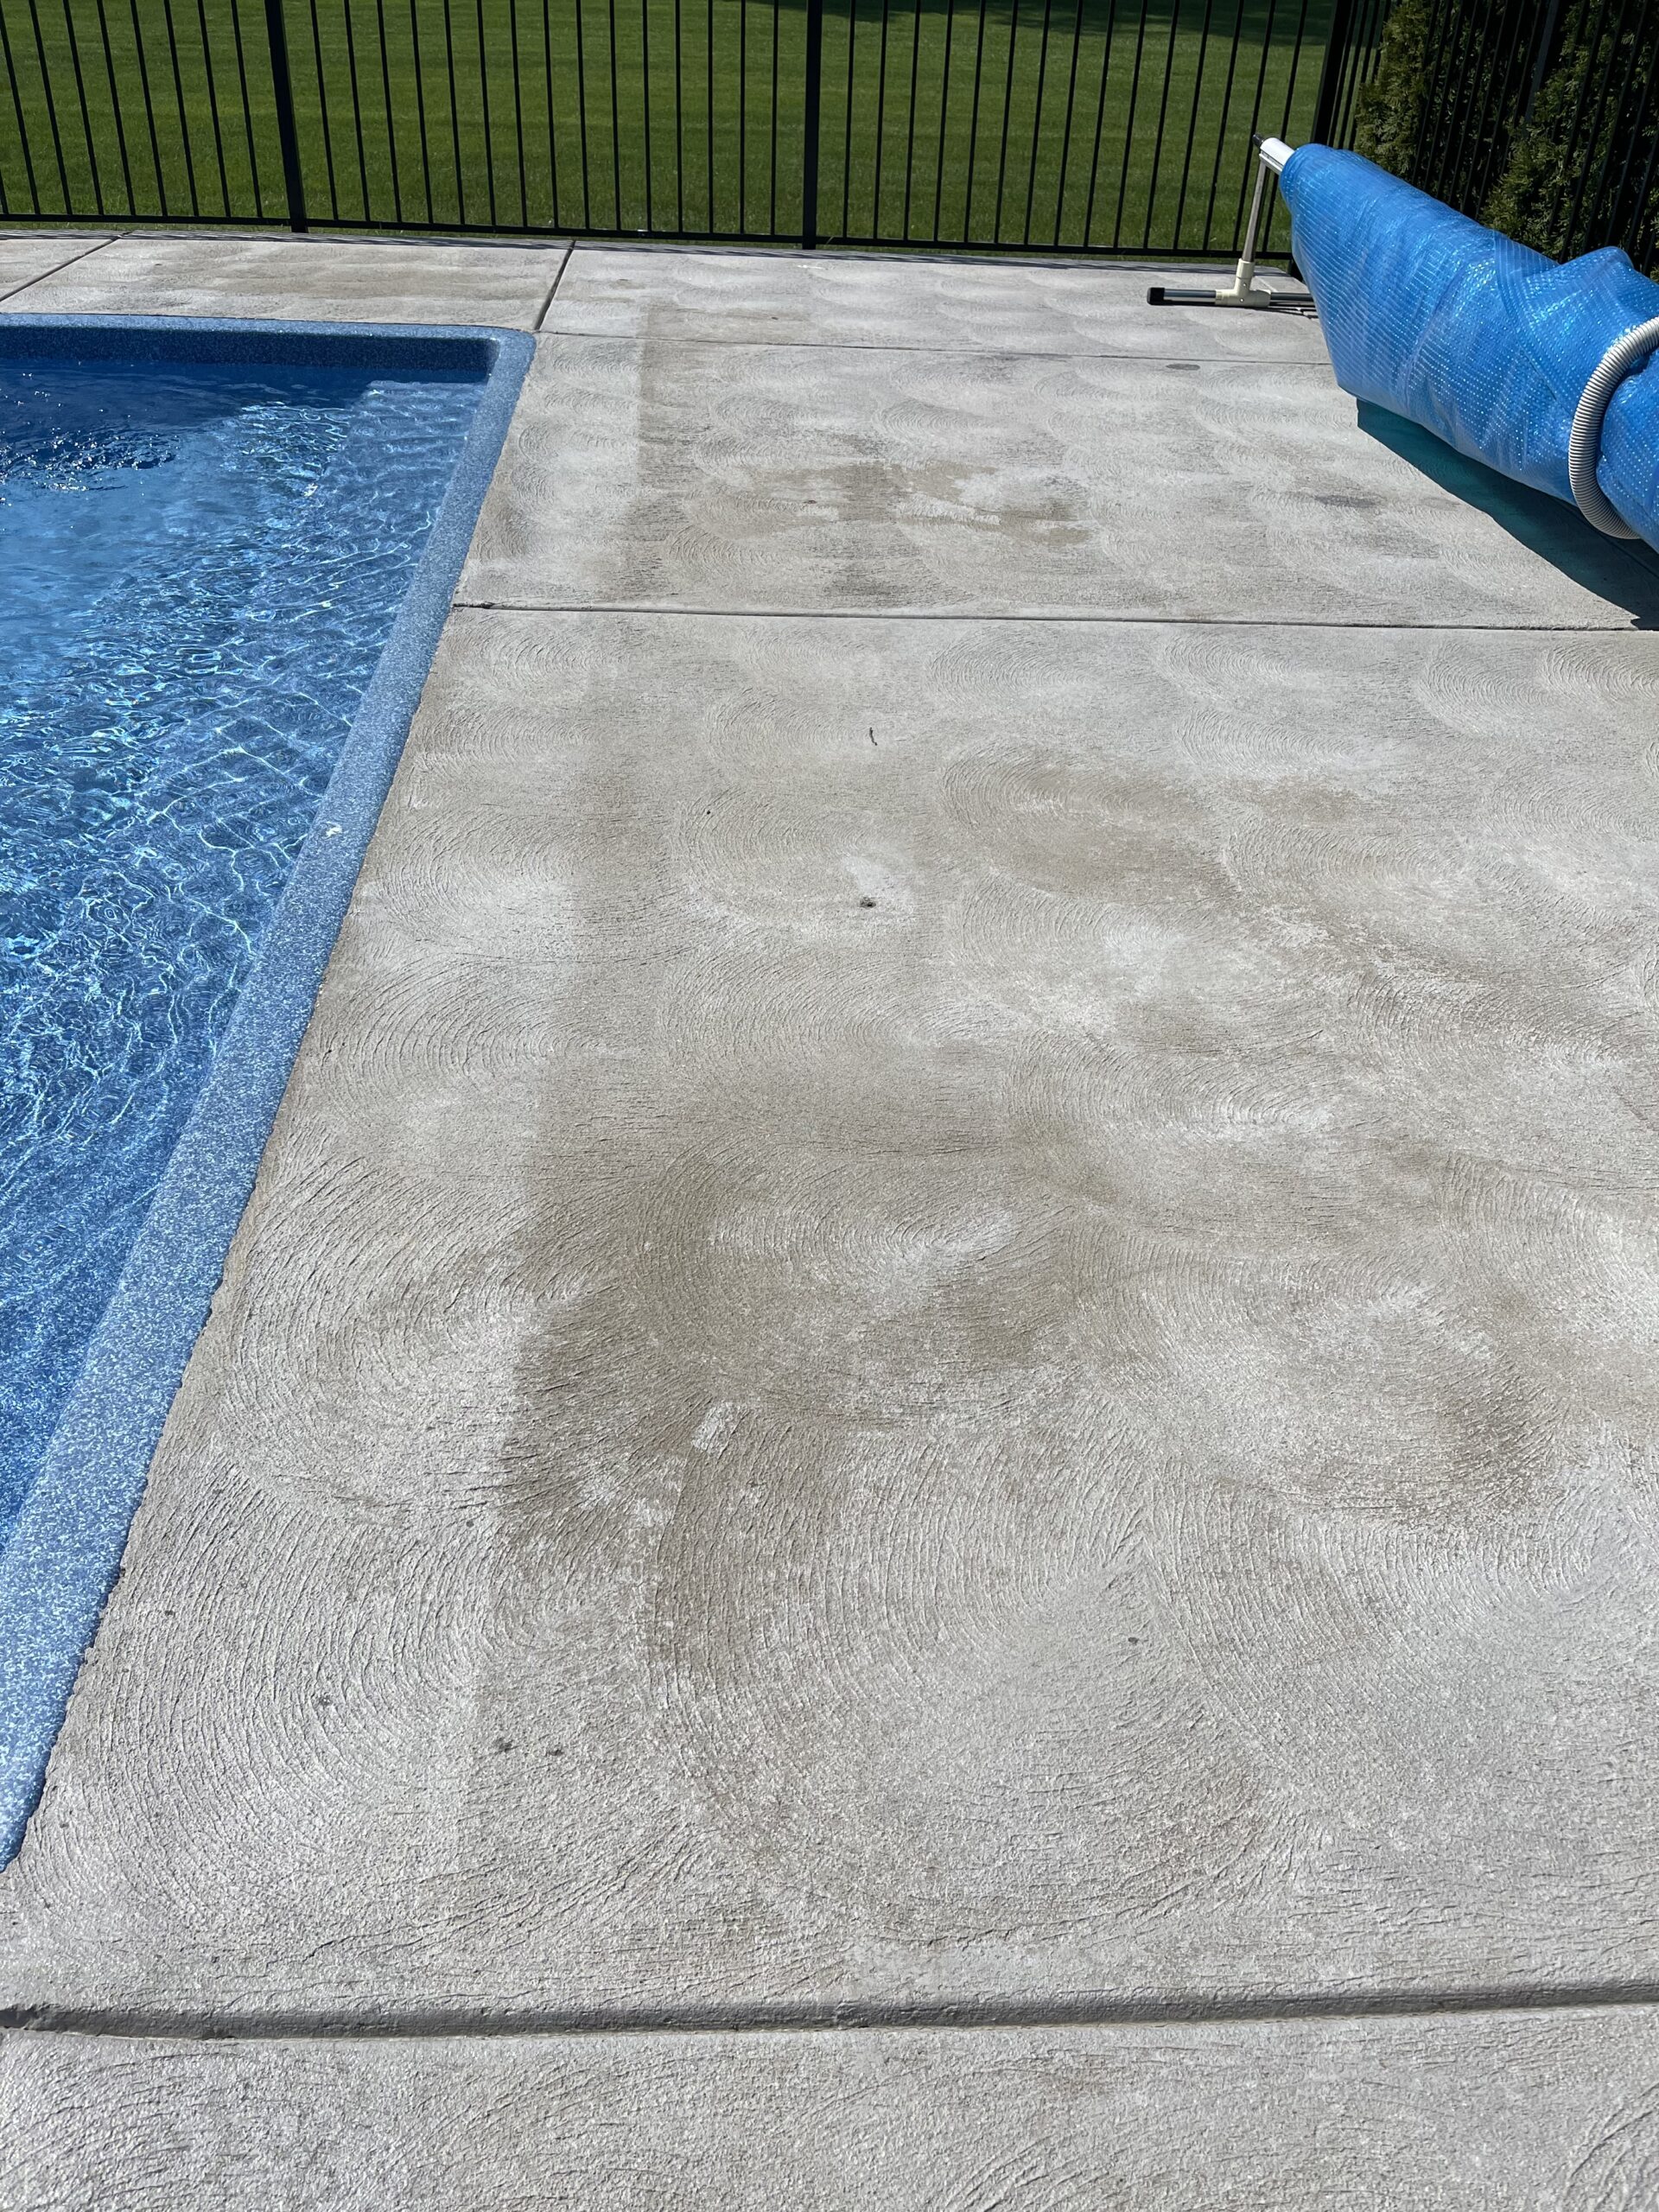 Swirl finish concrete pool deck